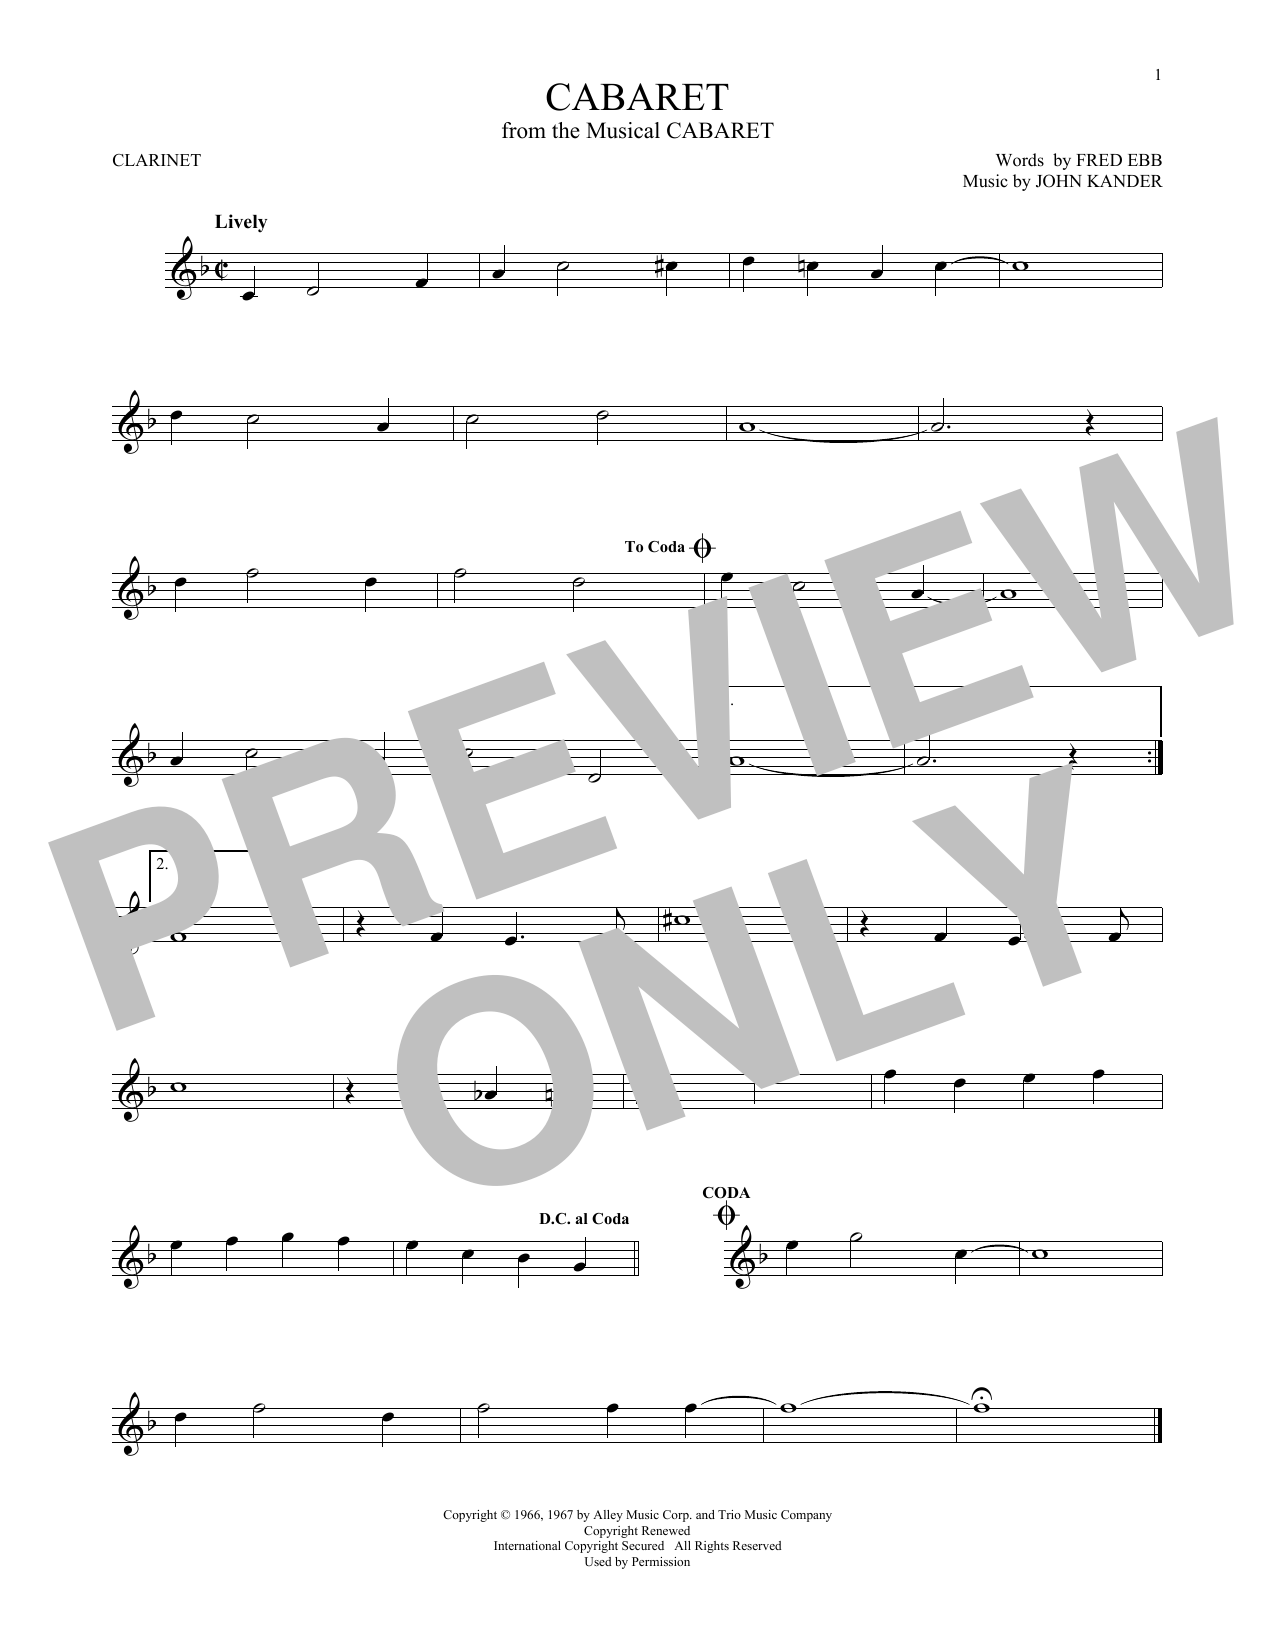 John Kander & Fred Ebb Cabaret Sheet Music Notes & Chords for Clarinet - Download or Print PDF